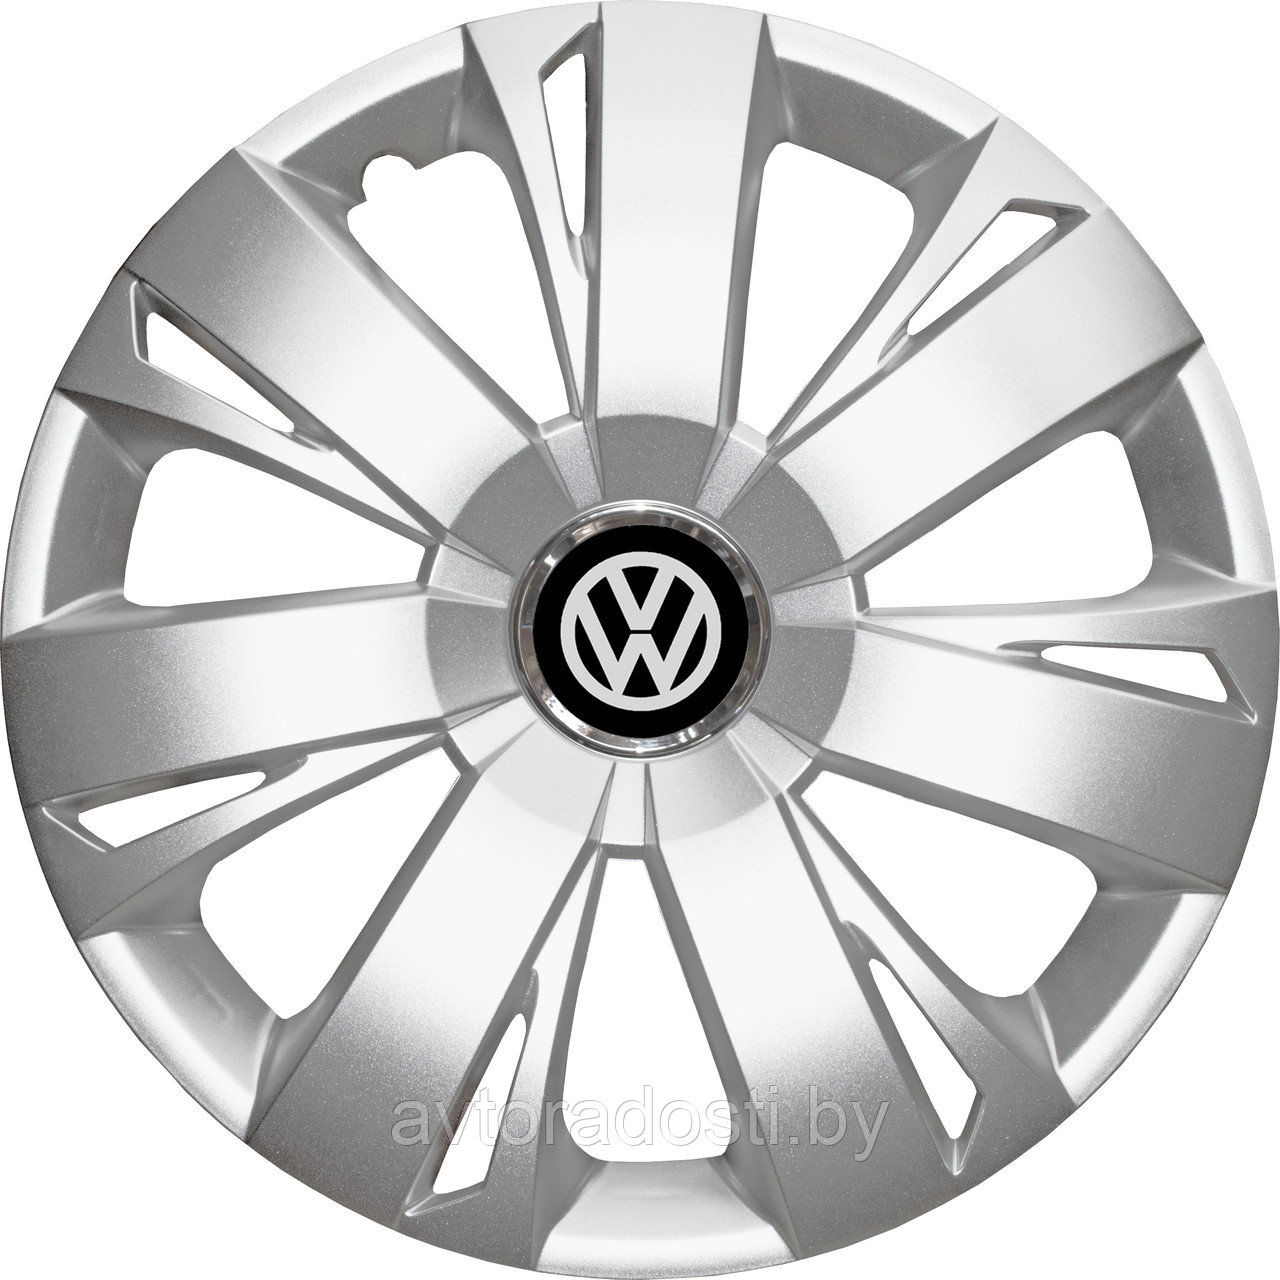 Колпаки на колеса SJS модель 411 / 16"+ комплект значков Volkswagen